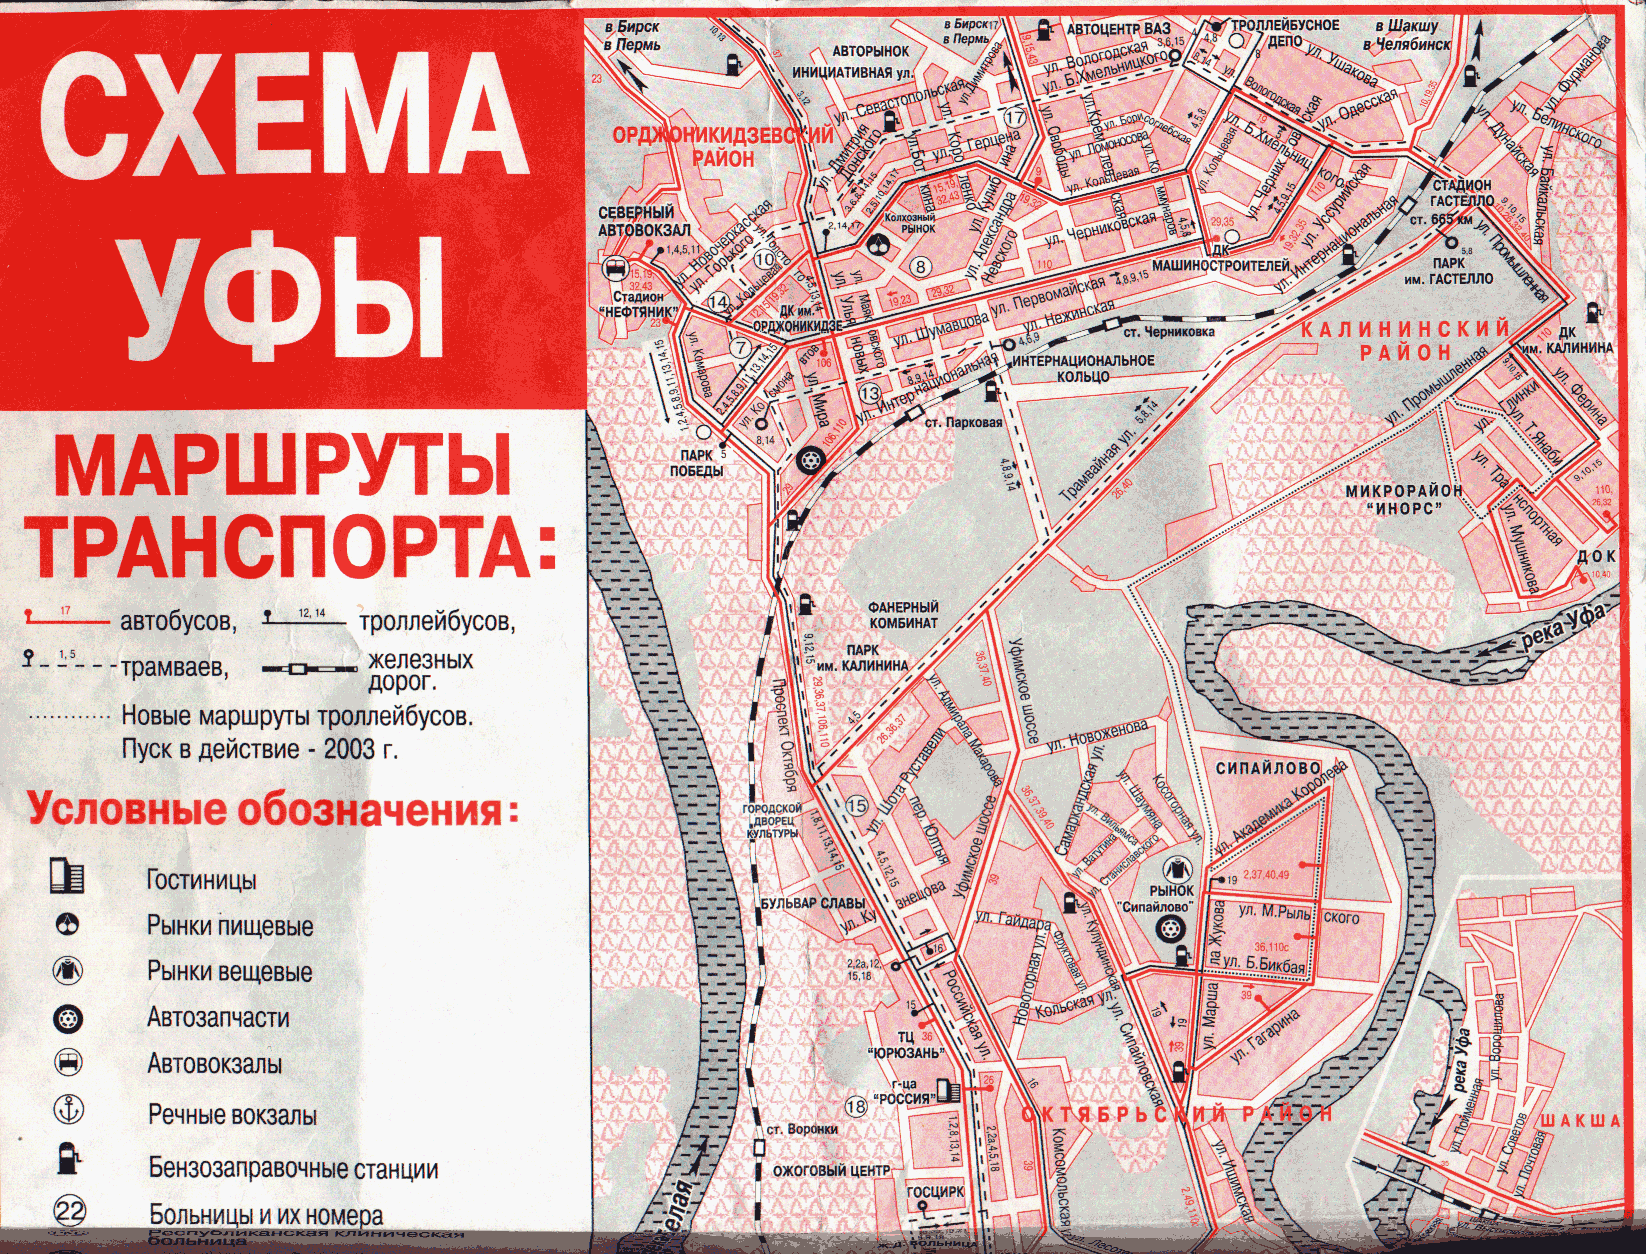 Карта уфа башкортостан с улицами